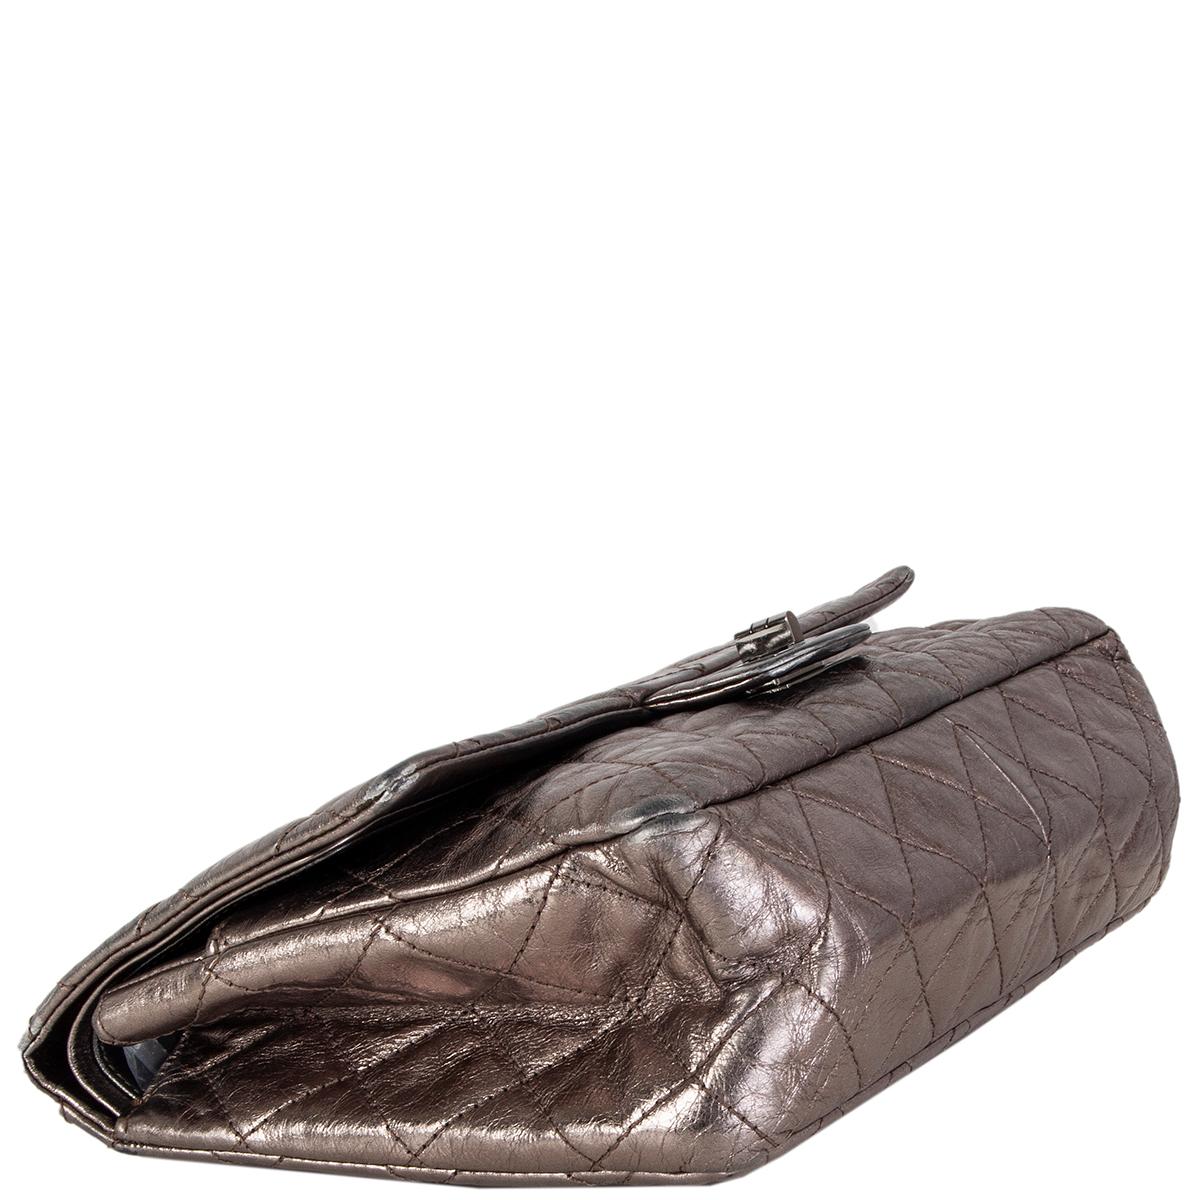 Silver CHANEL metallic silver 2.55 REISSUE 227 FLAP Shoulder Bag